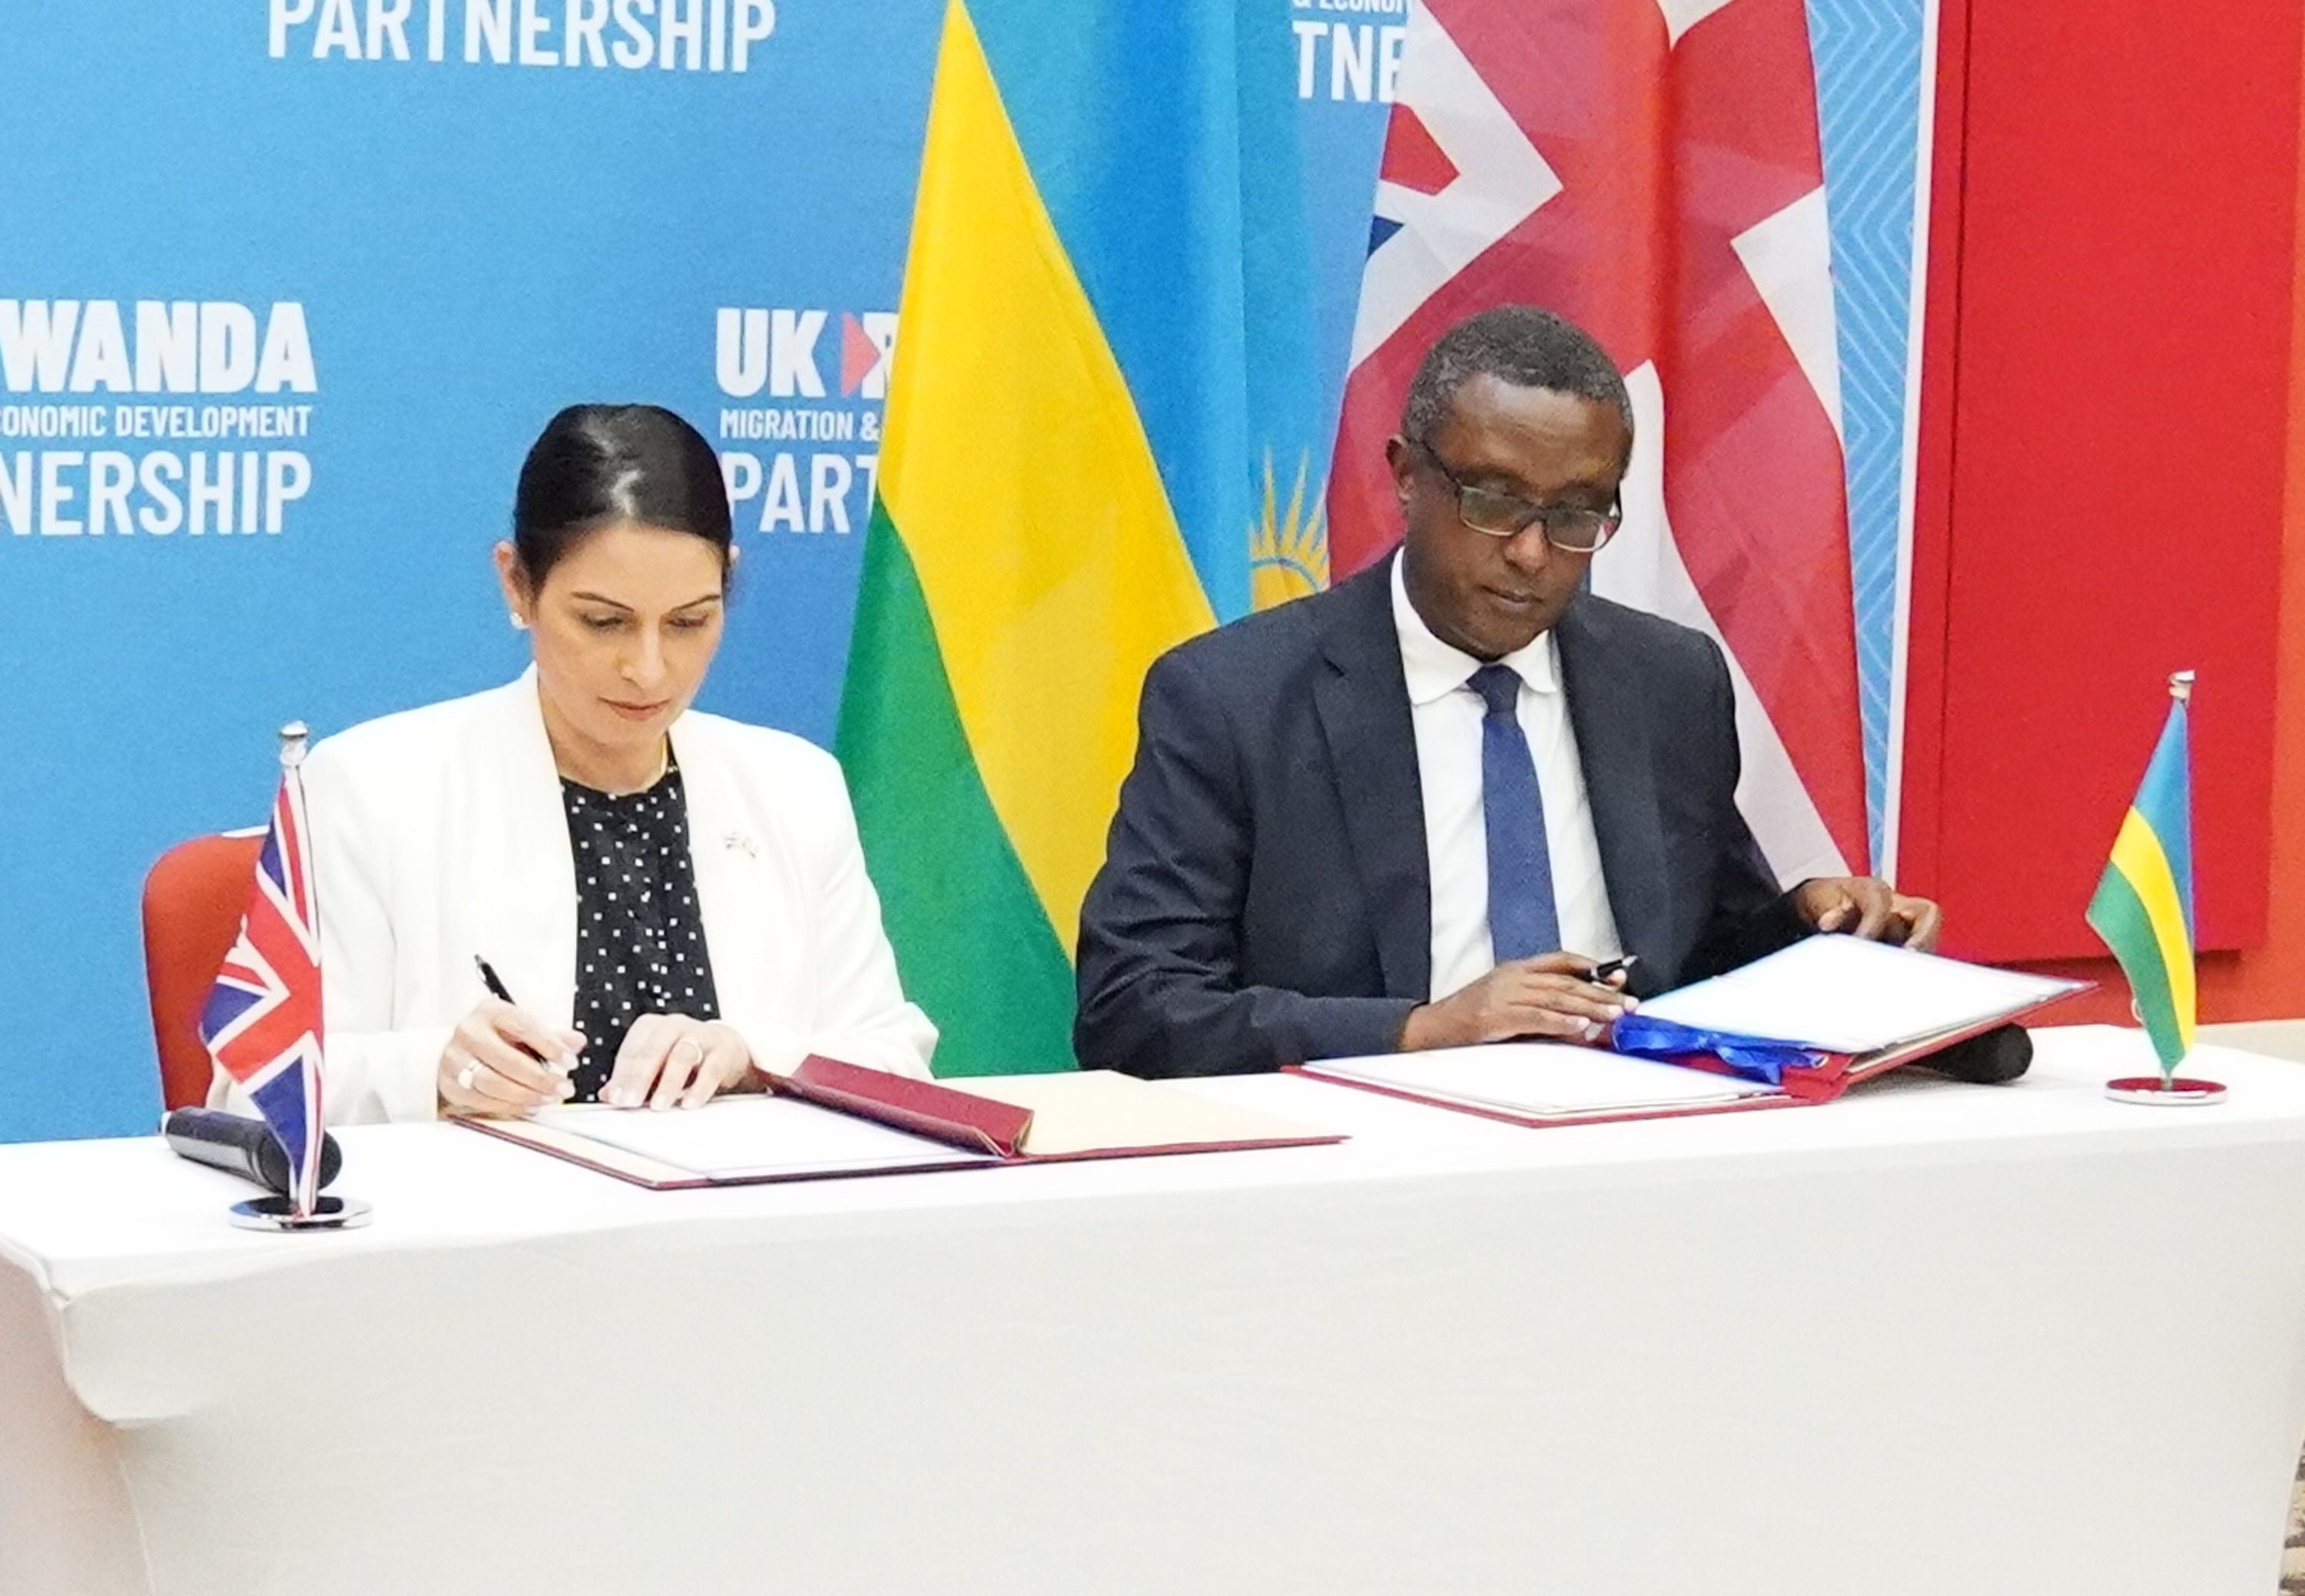 Home Secretary Priti Patel and Rwandan minister Vincent Biruta, signed a ‘world-first’ migration and economic development partnership earlier this year